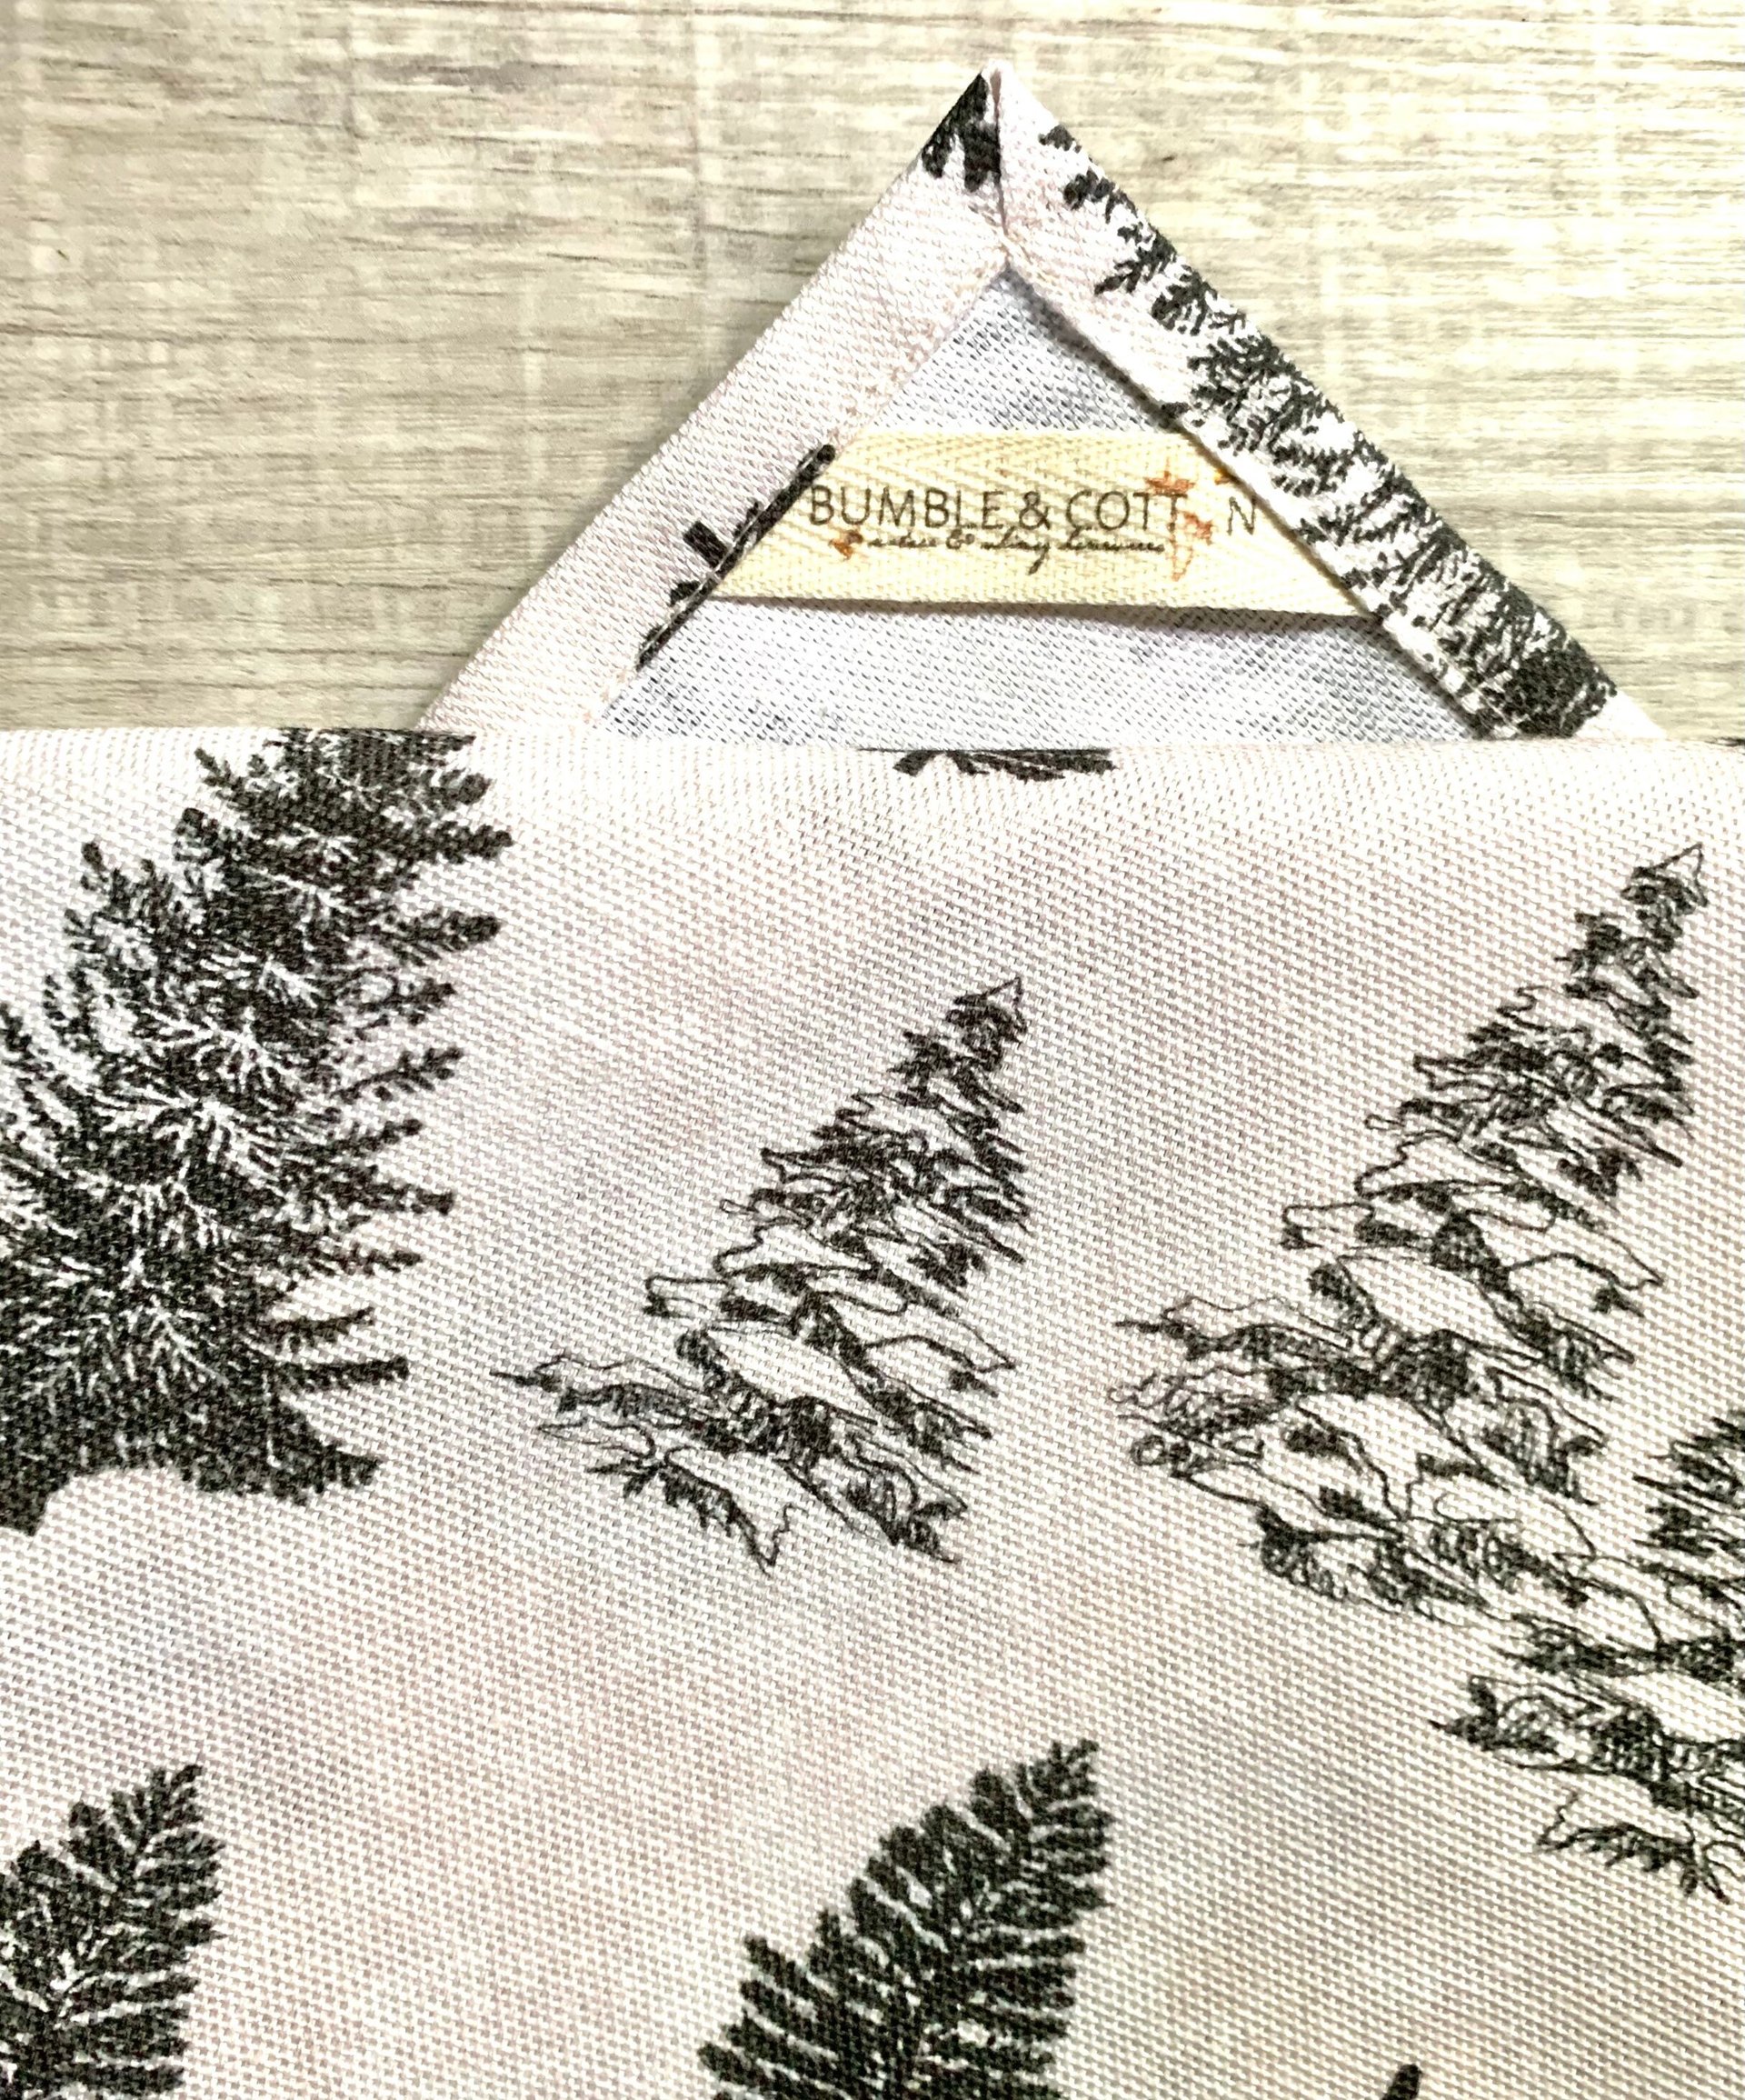 Pine Trees Chef Towel || Pine Trees Kitchen Towel || Flour Sack Towel